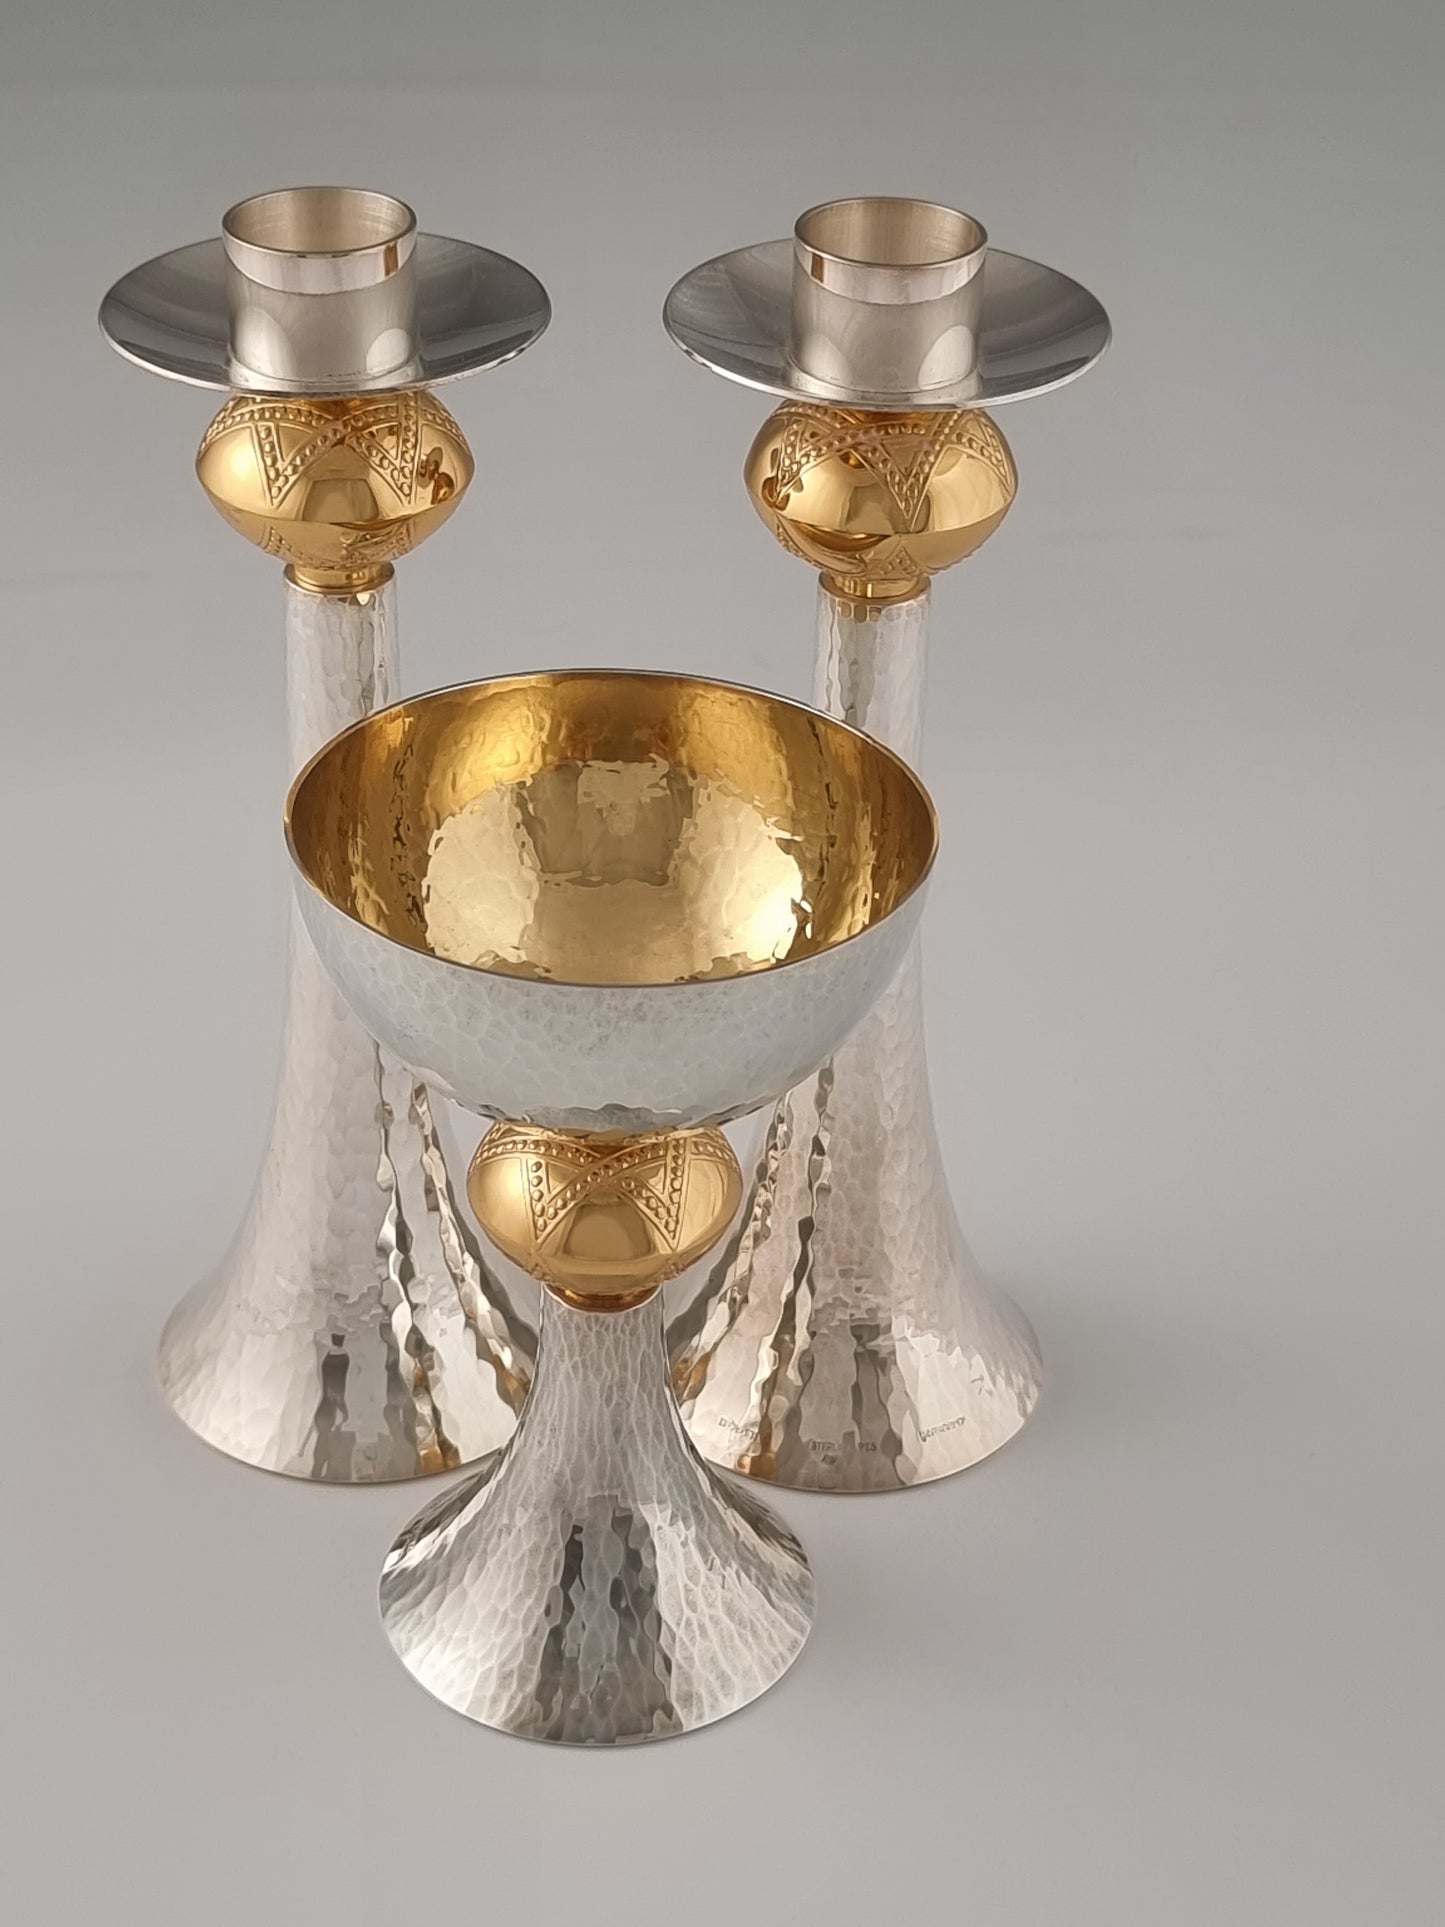 A pair of David candlesticks behind a David Kiddush cup